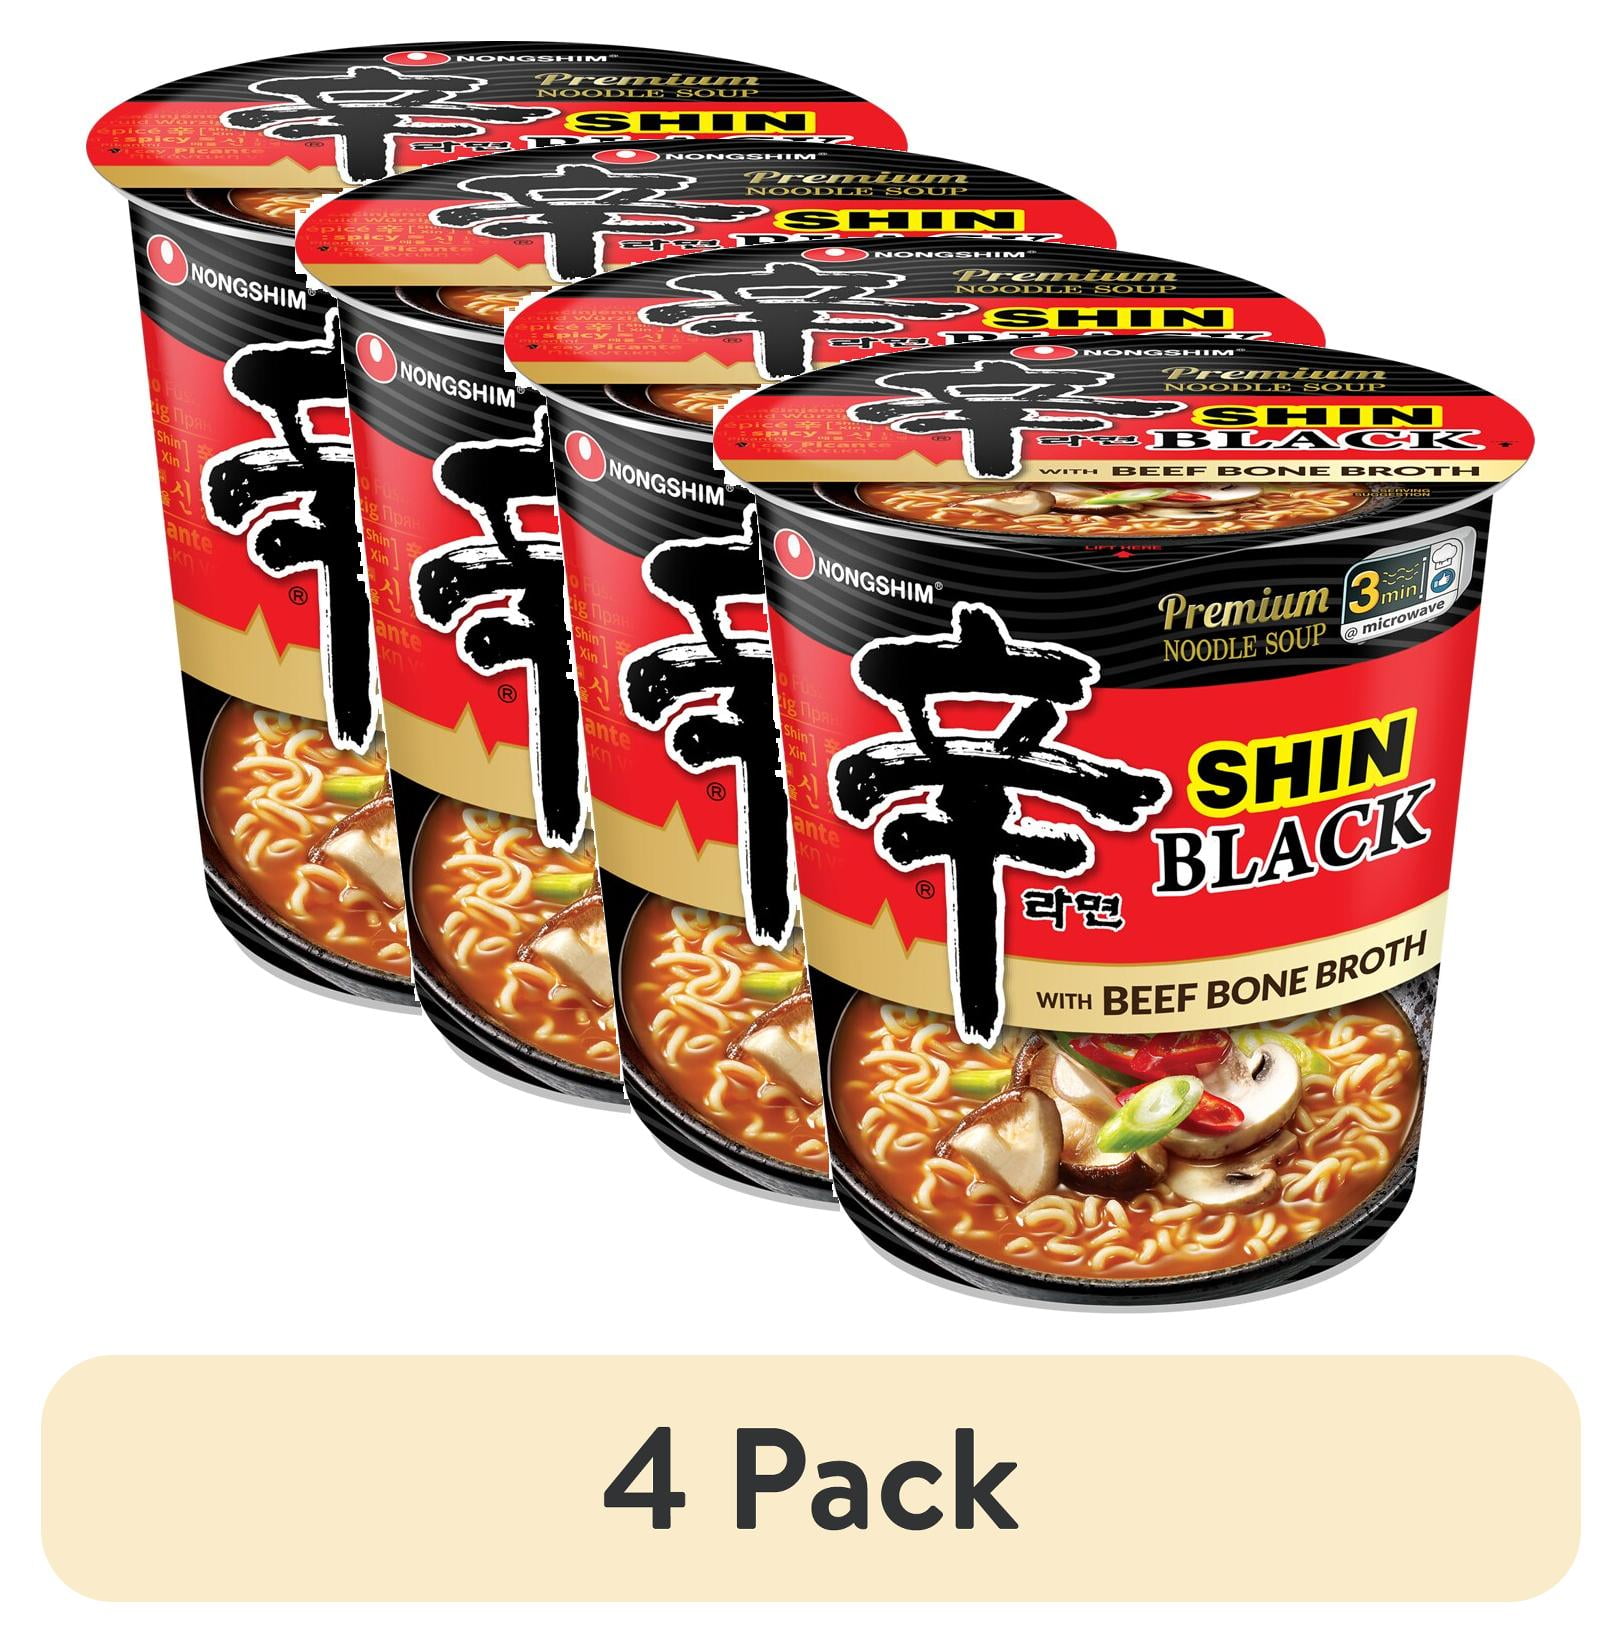 Nongshim Shin Black Spicy Beef & Bone Broth Ramyun Premium Ramen Noodle  Soup Cup, 3.5oz X 1 Count 